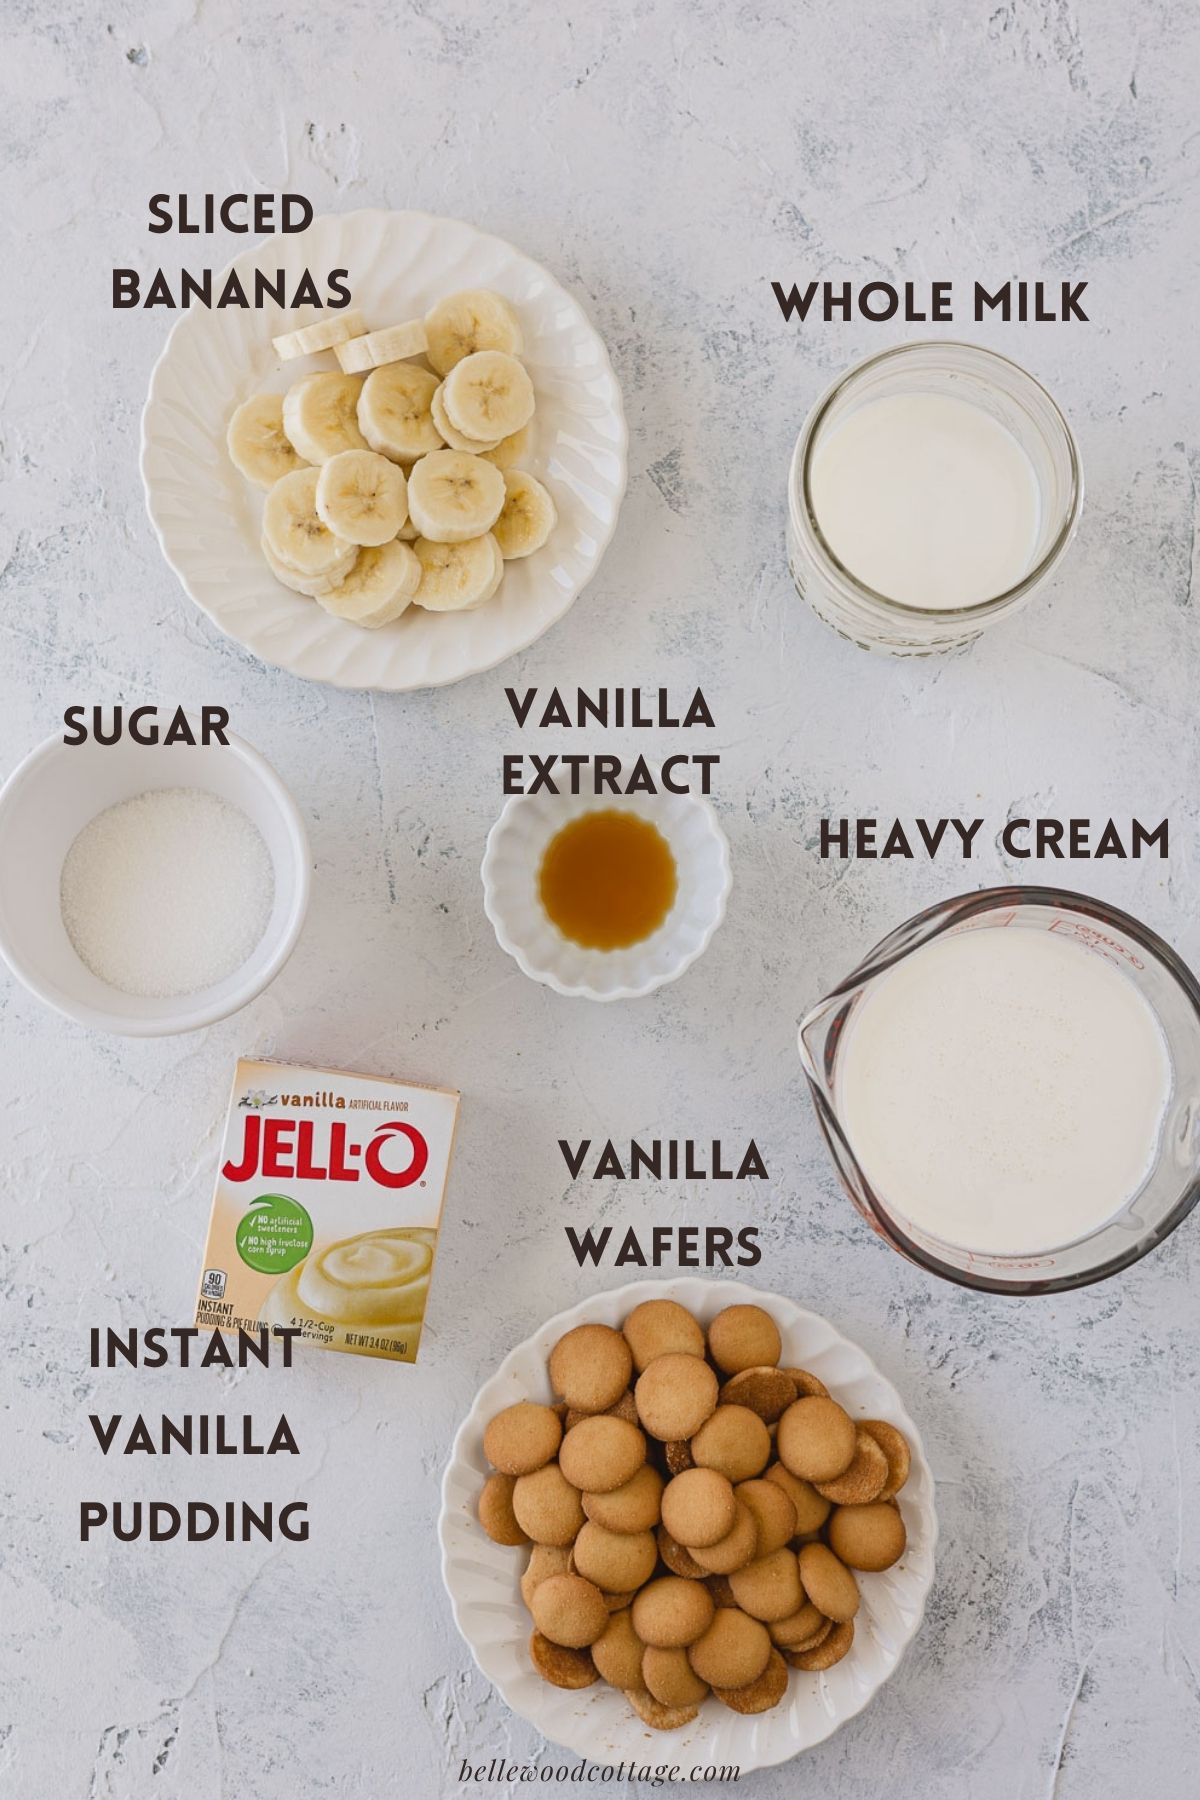 Labeled ingredients: sliced bananas, whole milk, sugar, vanilla extract, heavy cream, instant vanilla pudding, vanilla wafers.